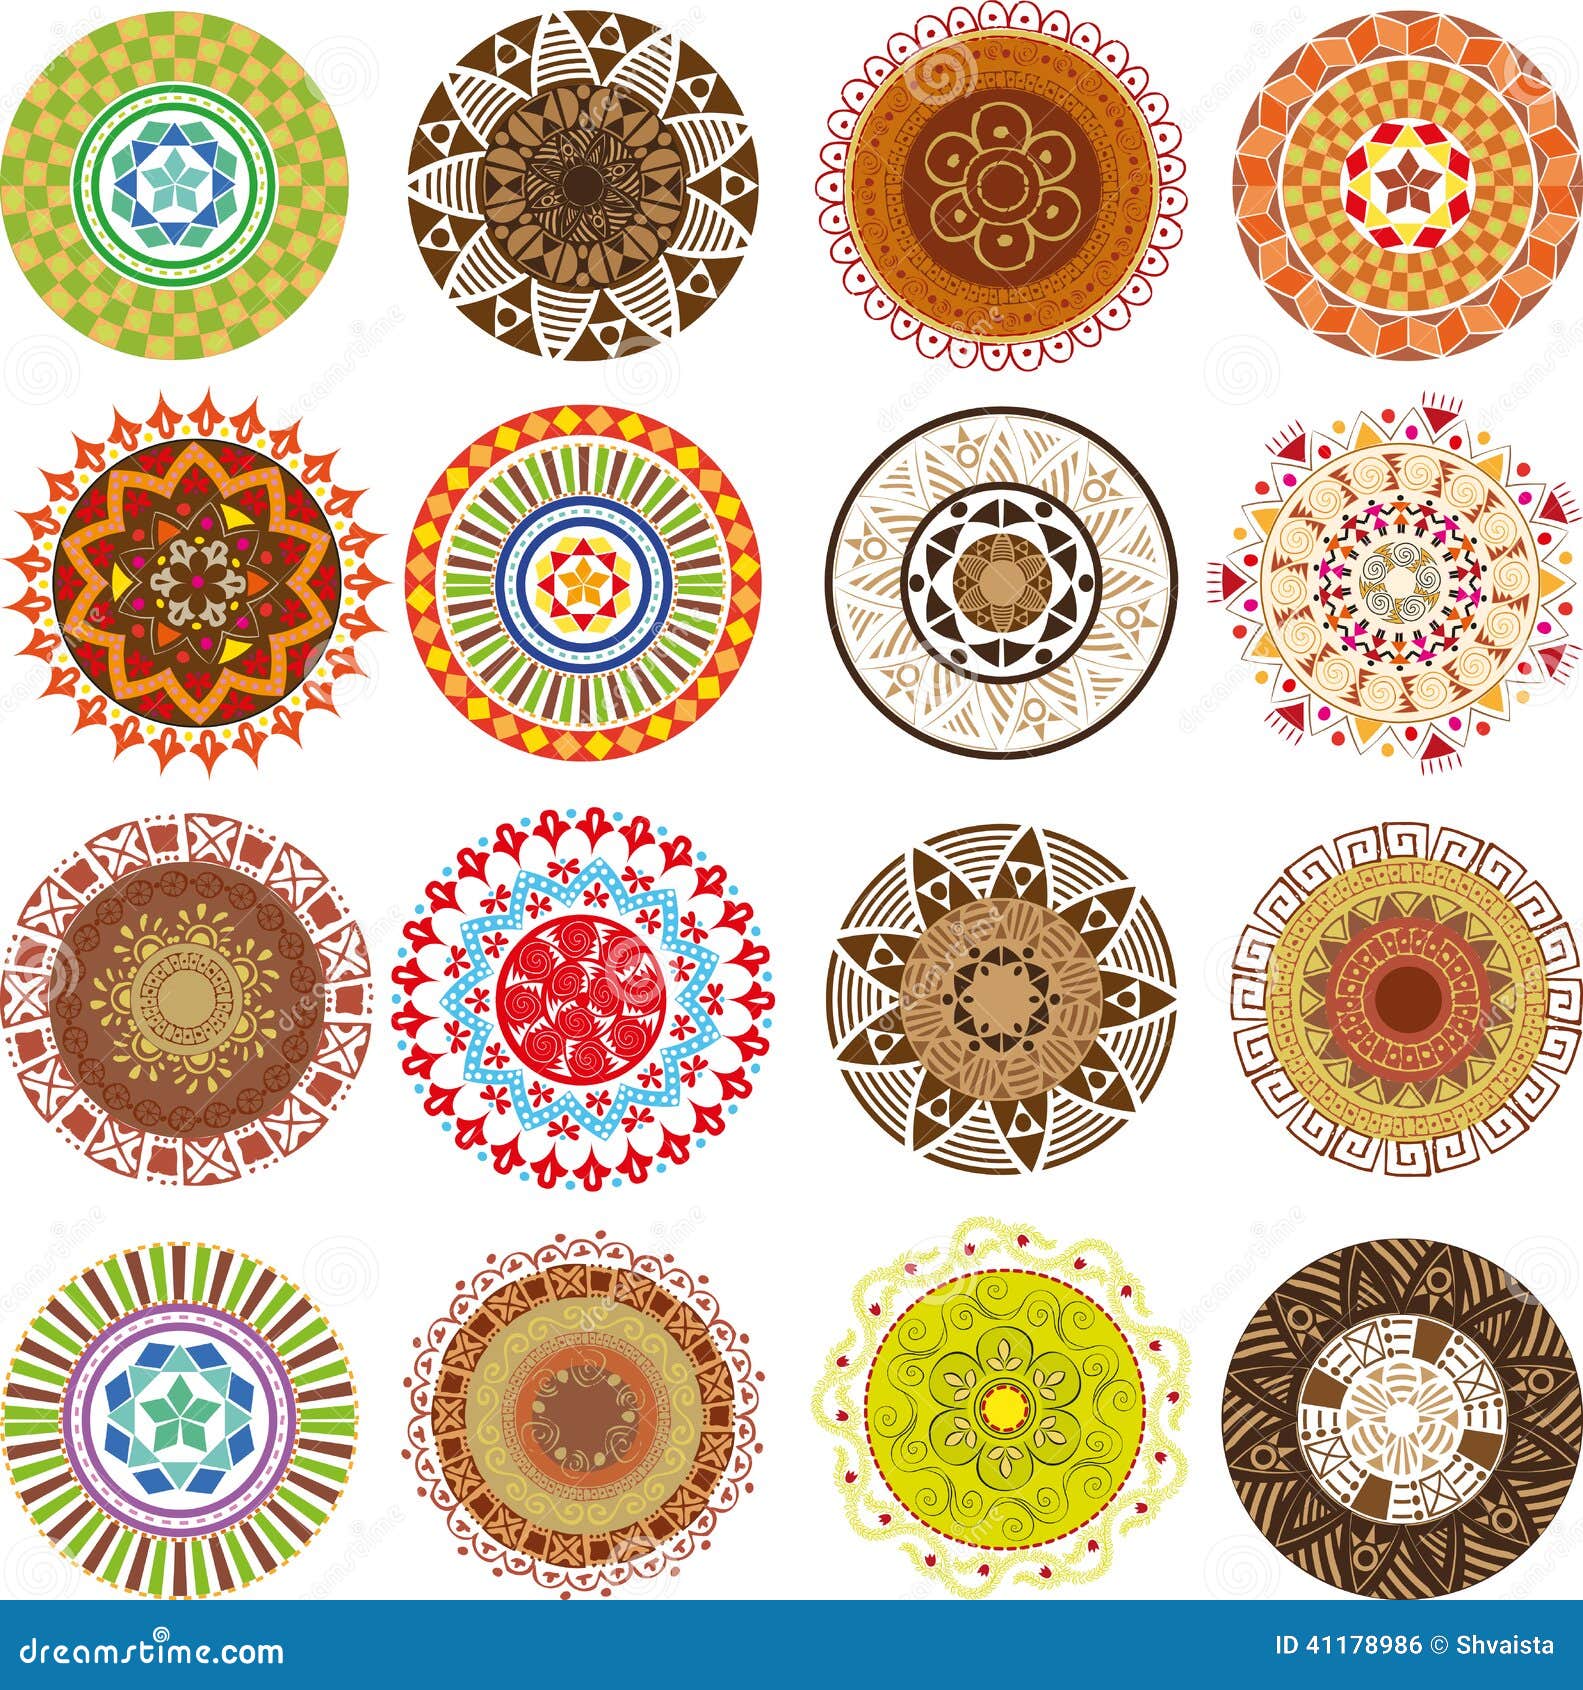 Colored Mandalas Stock Illustration Image 41178986